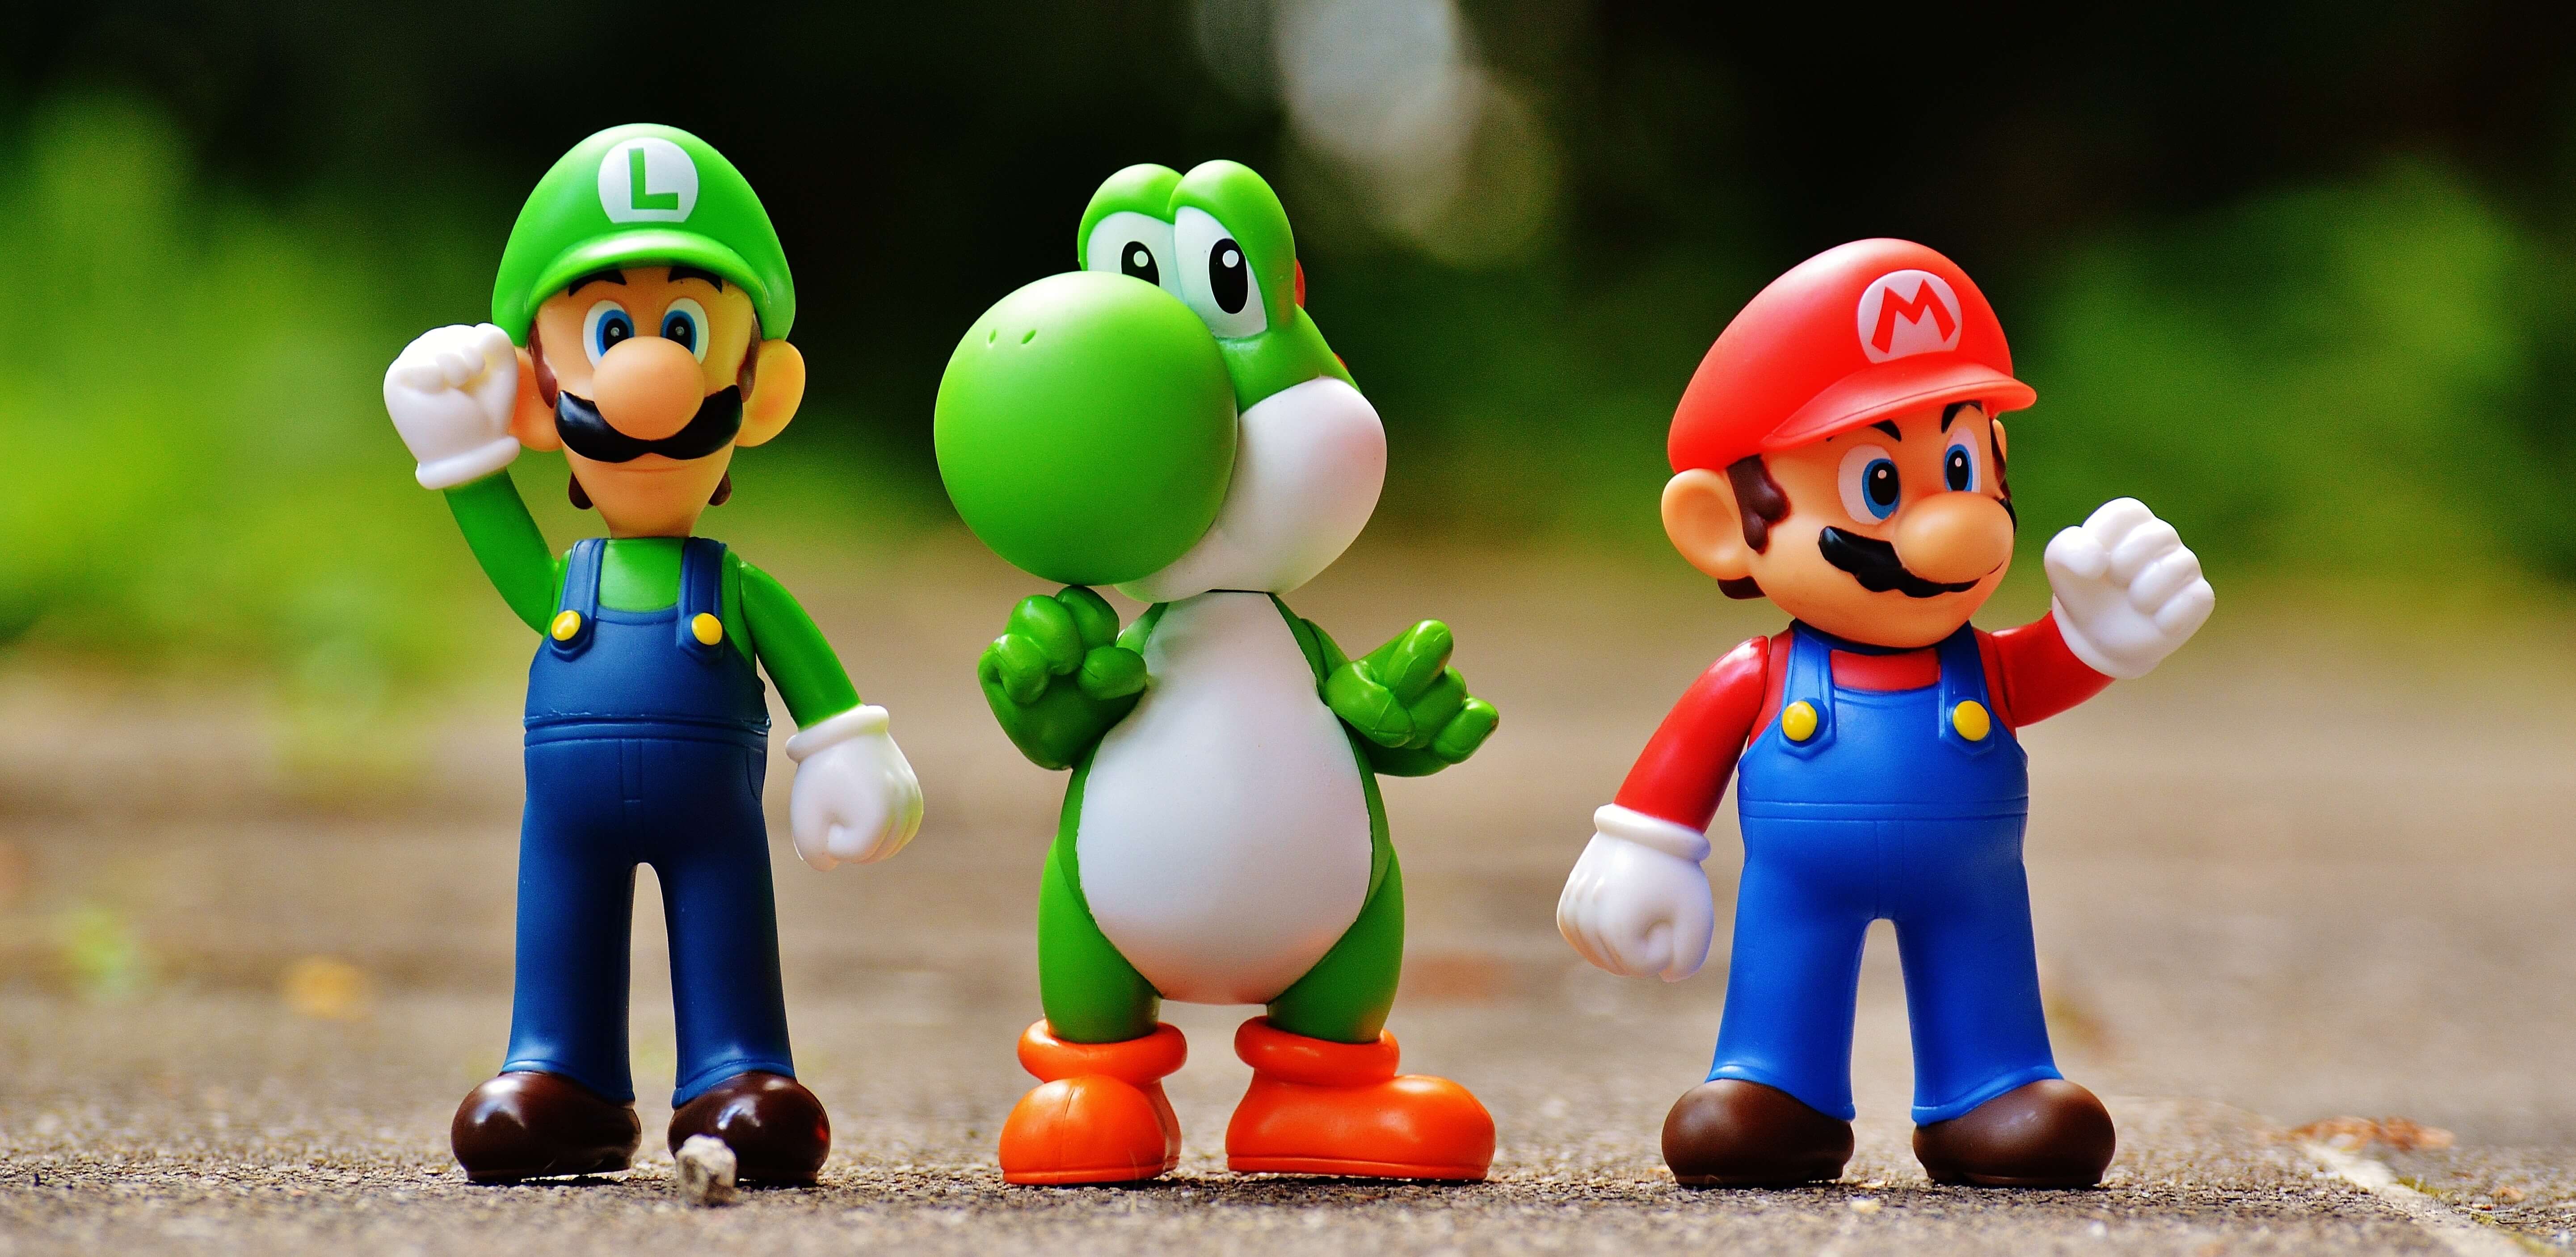 Mario, Luigi and Yoshi – protagonists from the Nintendo classic: Super Mario